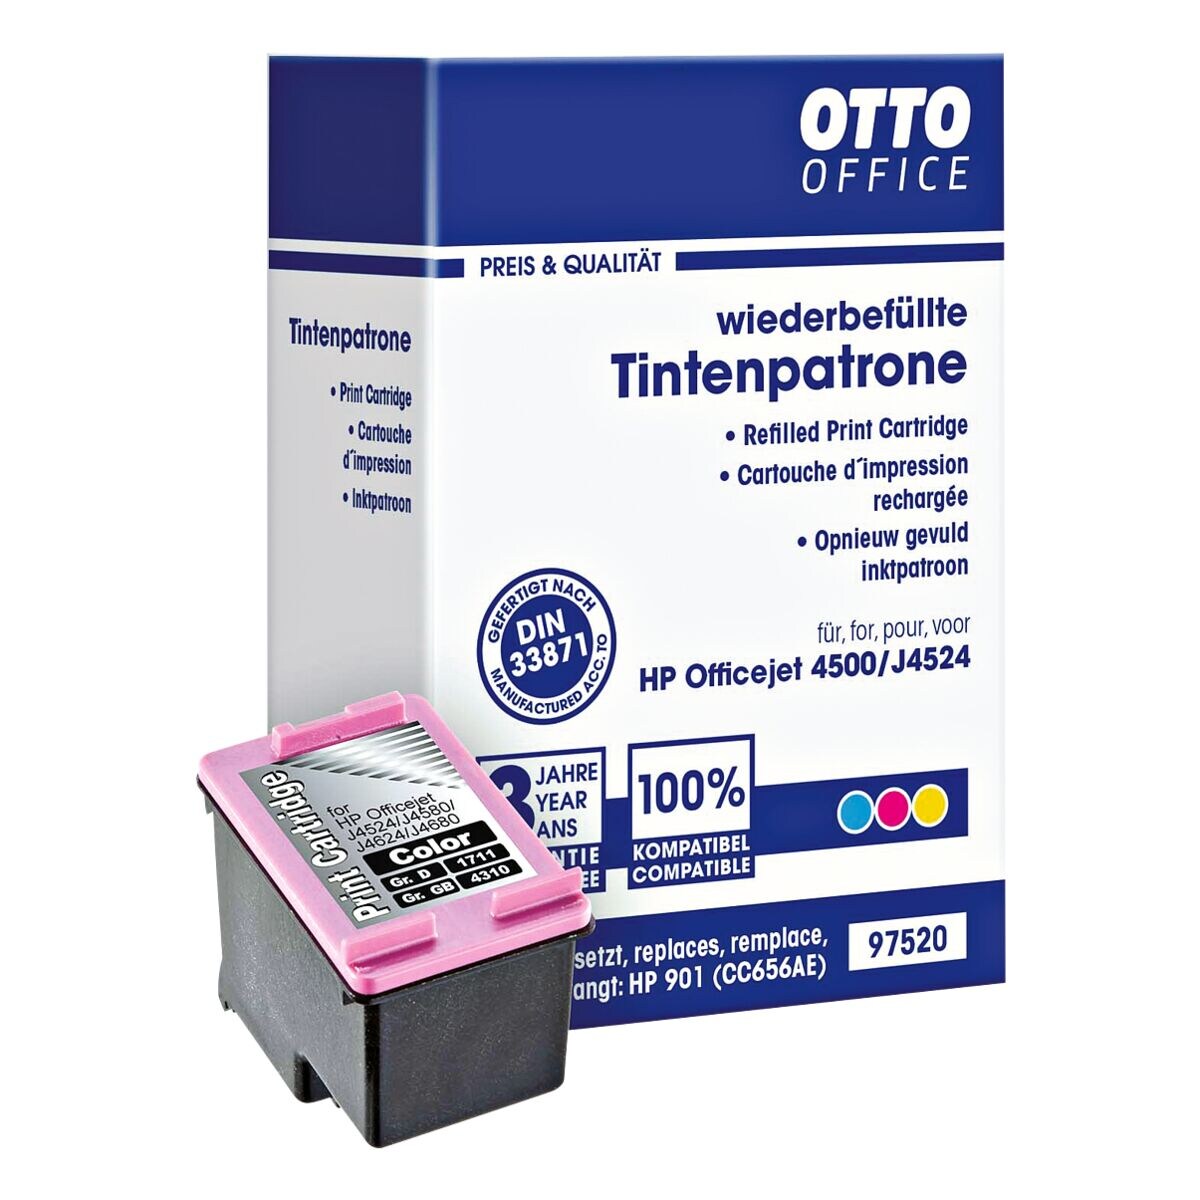 OTTO Office Inktpatroon vervangt HP  CC656AE Nr. 901